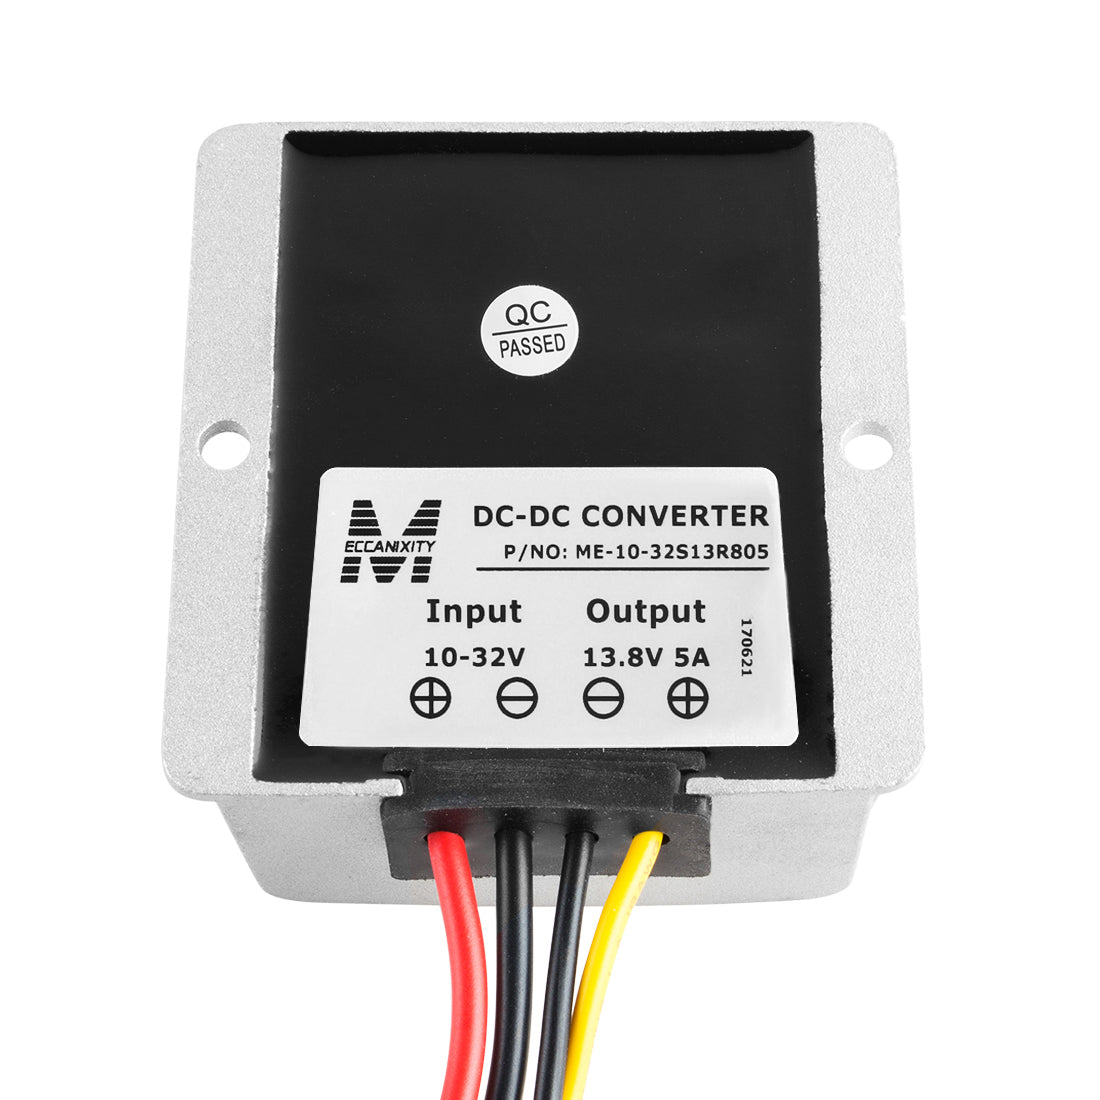 uxcell uxcell Voltage Converter Regulator DC/DC DC 10-32V to DC 13.8V 5A 69W /Up Transformer Waterproof